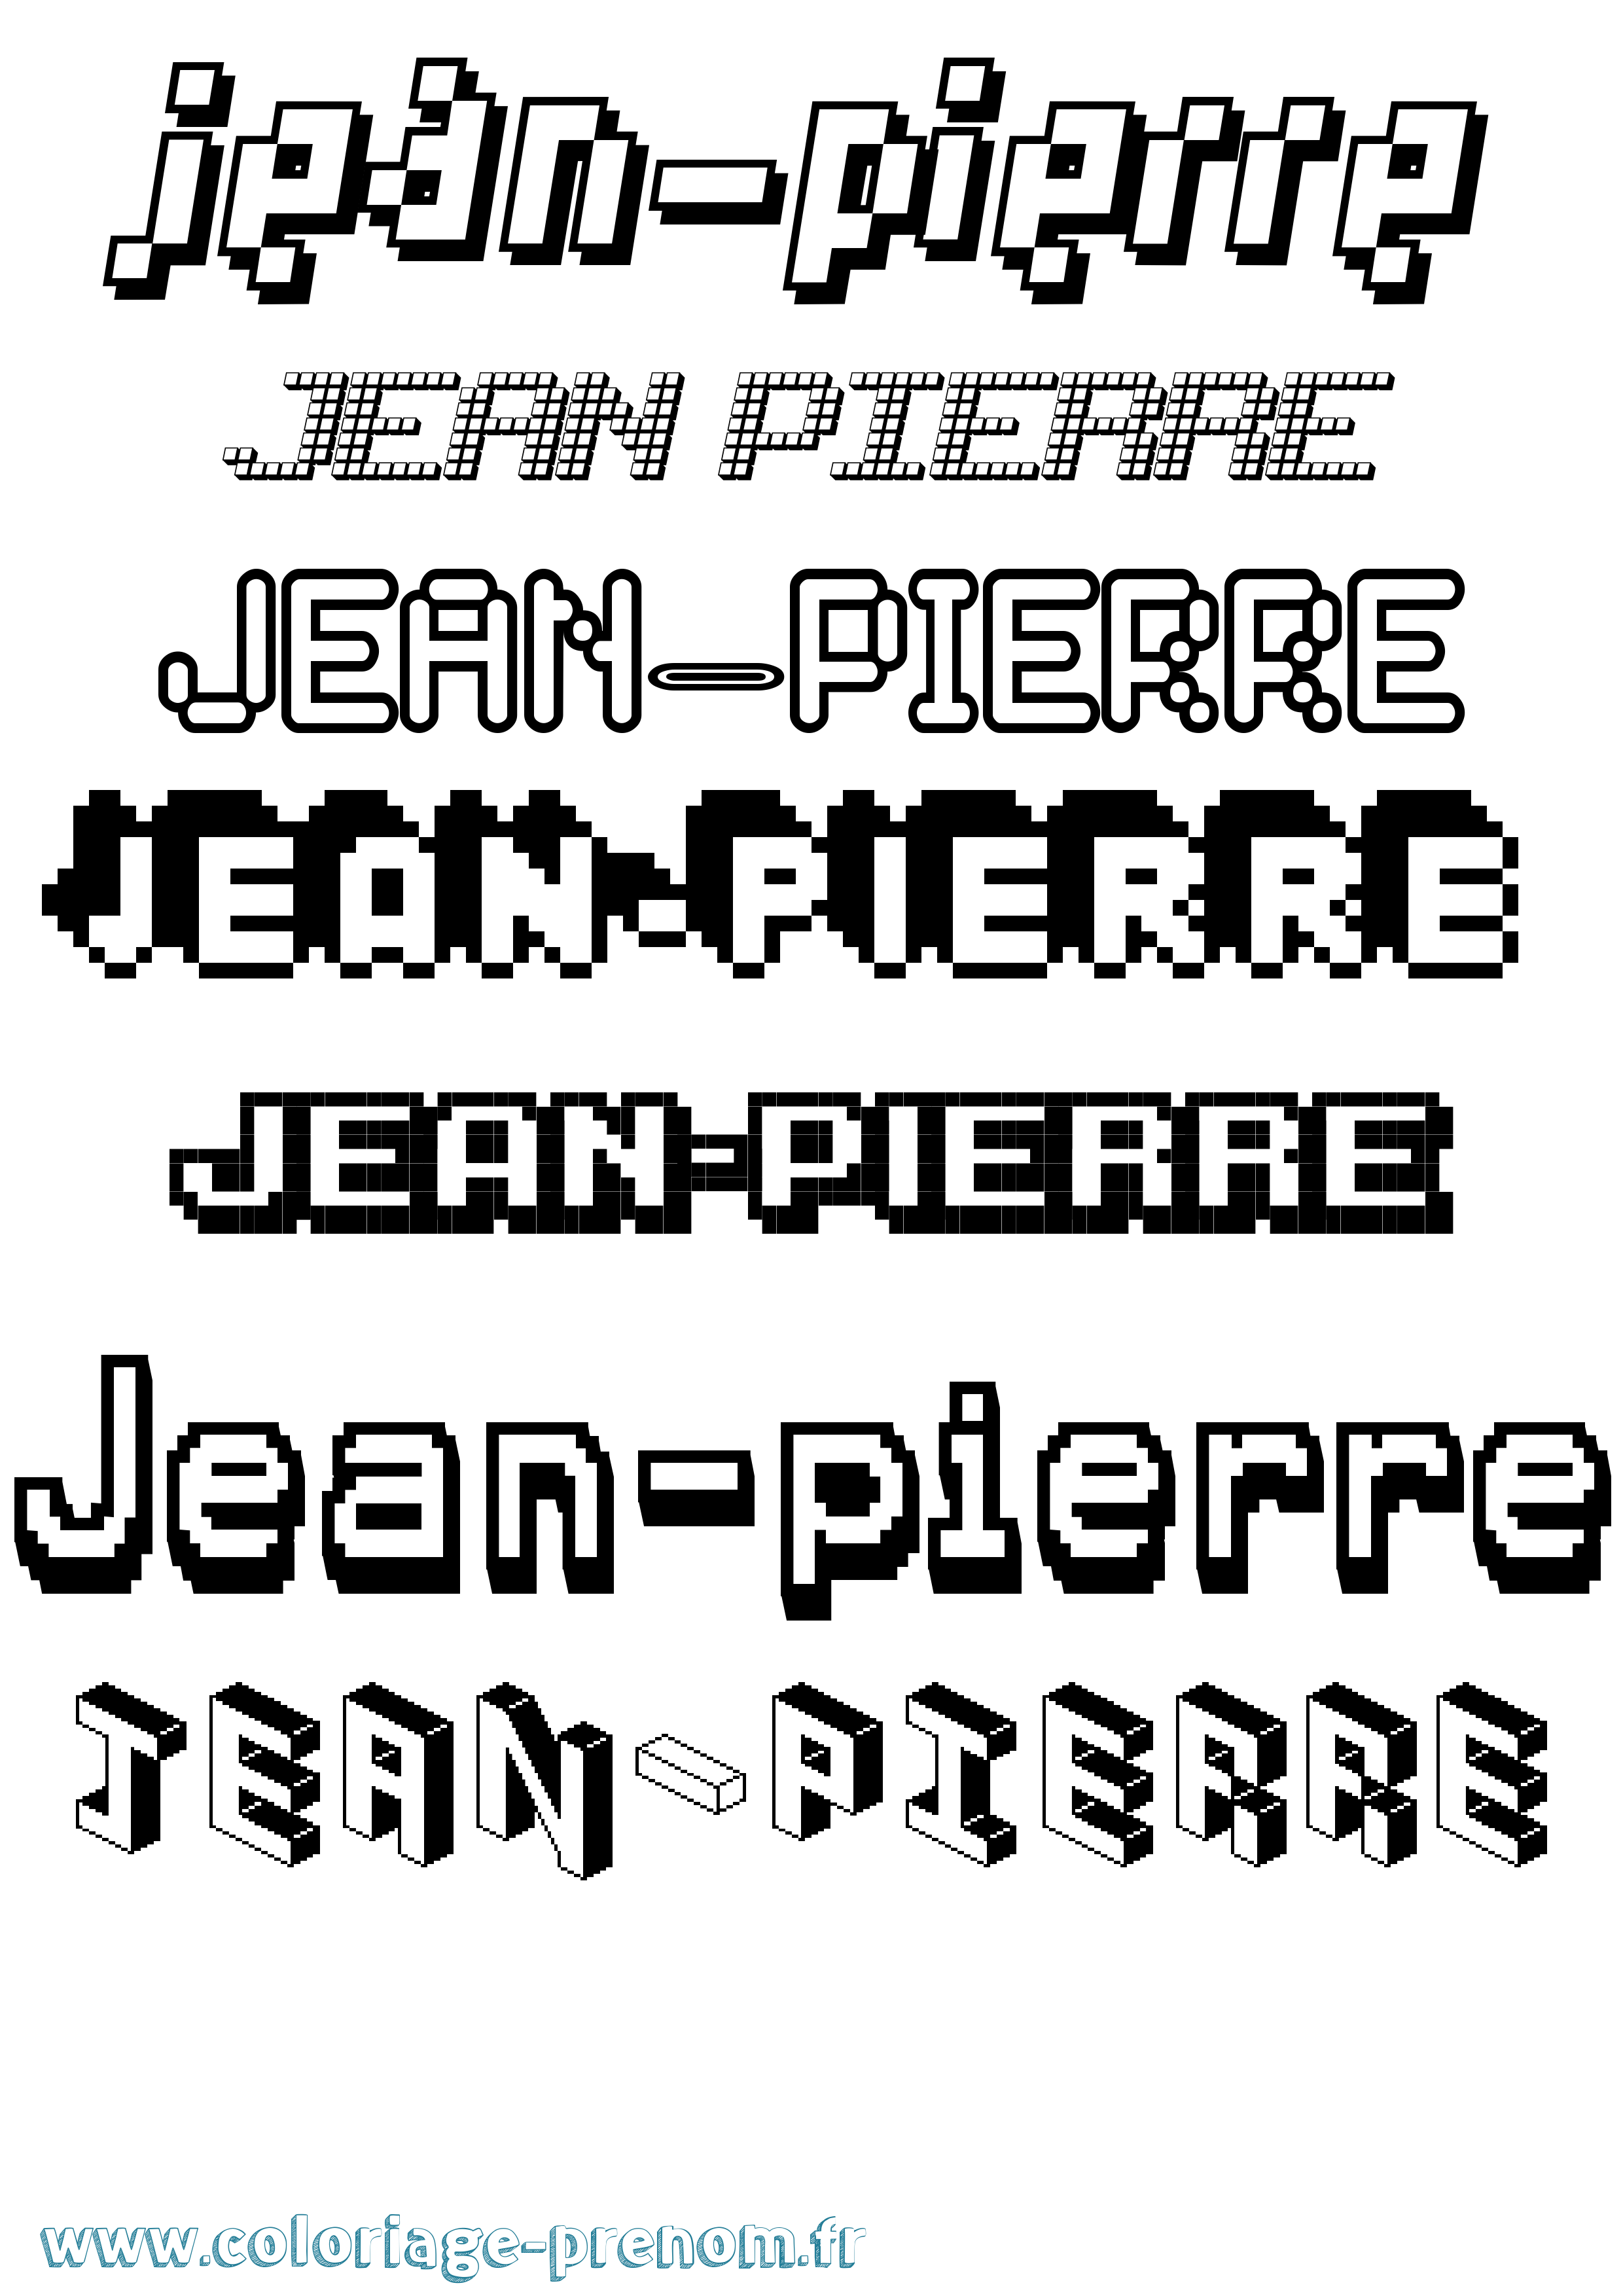 Coloriage prénom Jean-Pierre Pixel